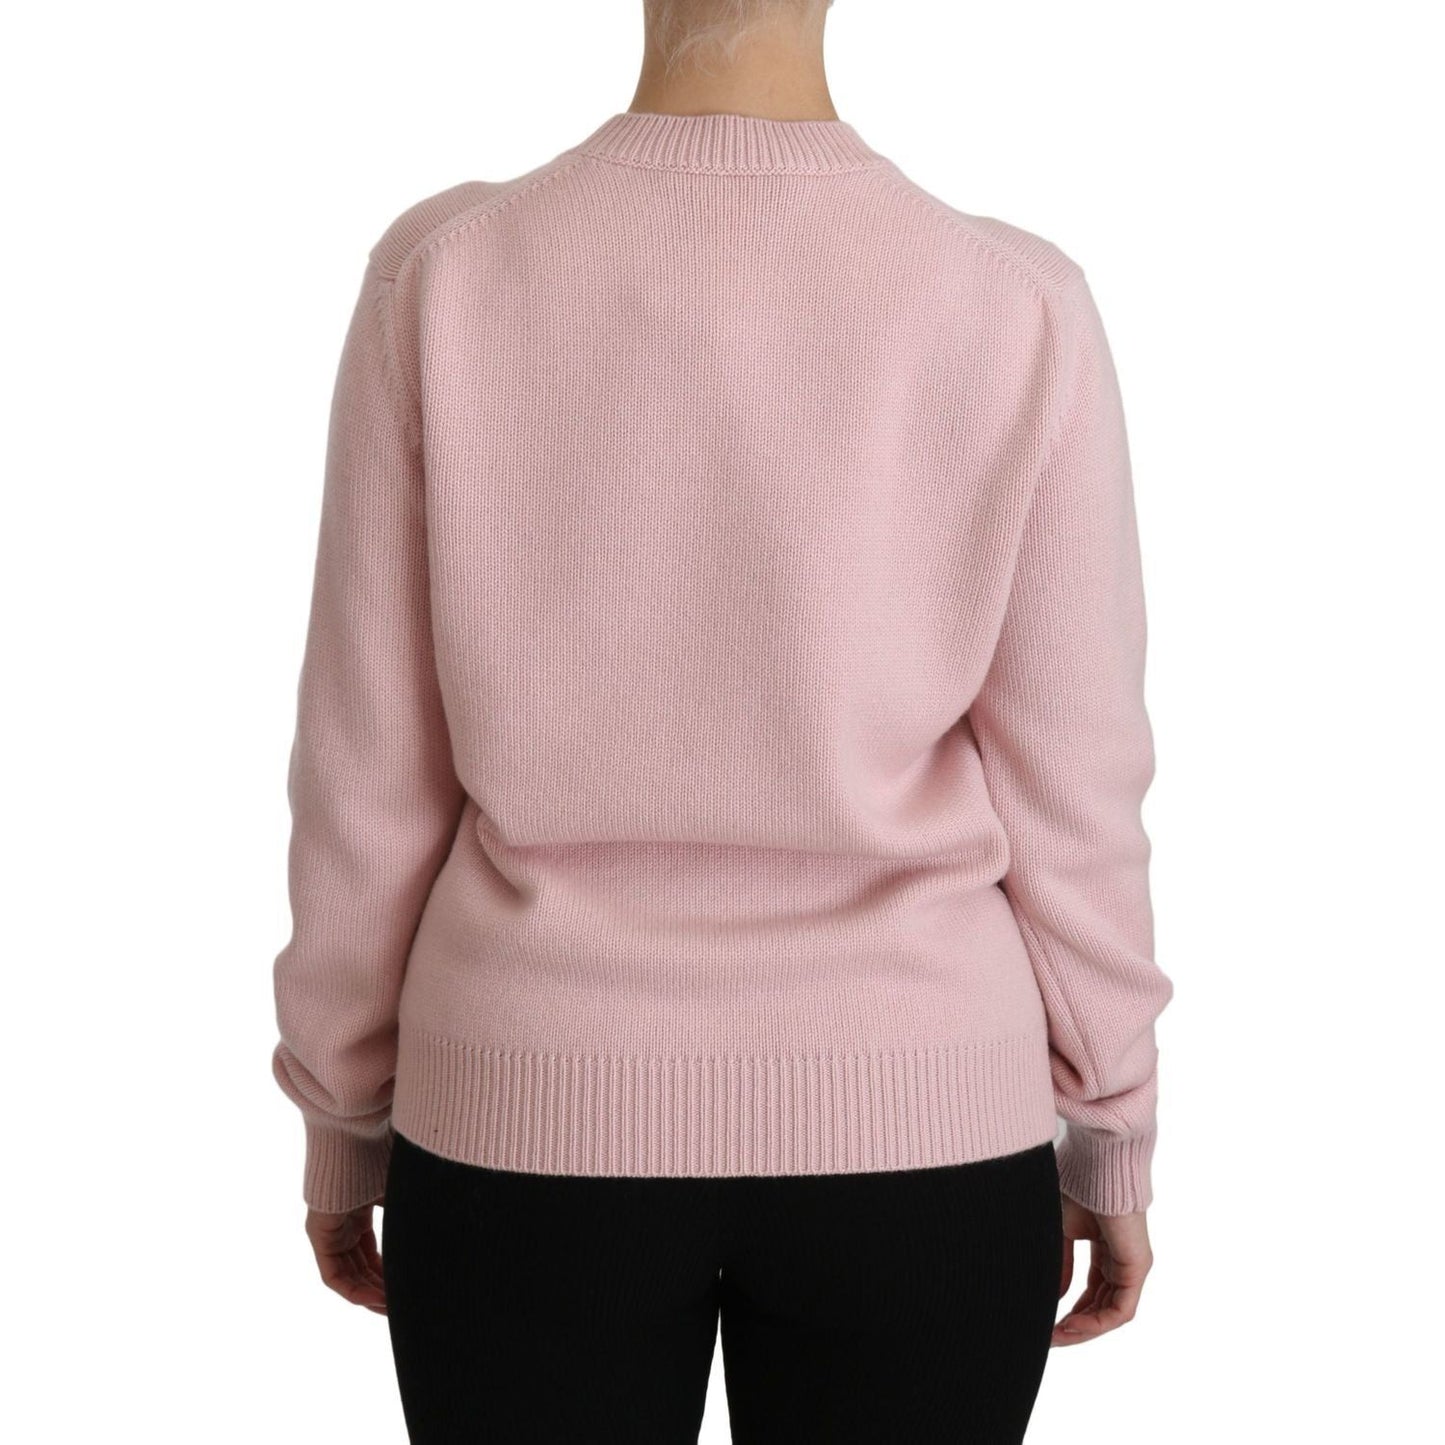 Dolce & Gabbana Cashmere-Blend Pink Crew Neck Sweater pink-crew-neck-cashmere-pullover-sweater IMG_2752-scaled-7e214bce-1c1.jpg